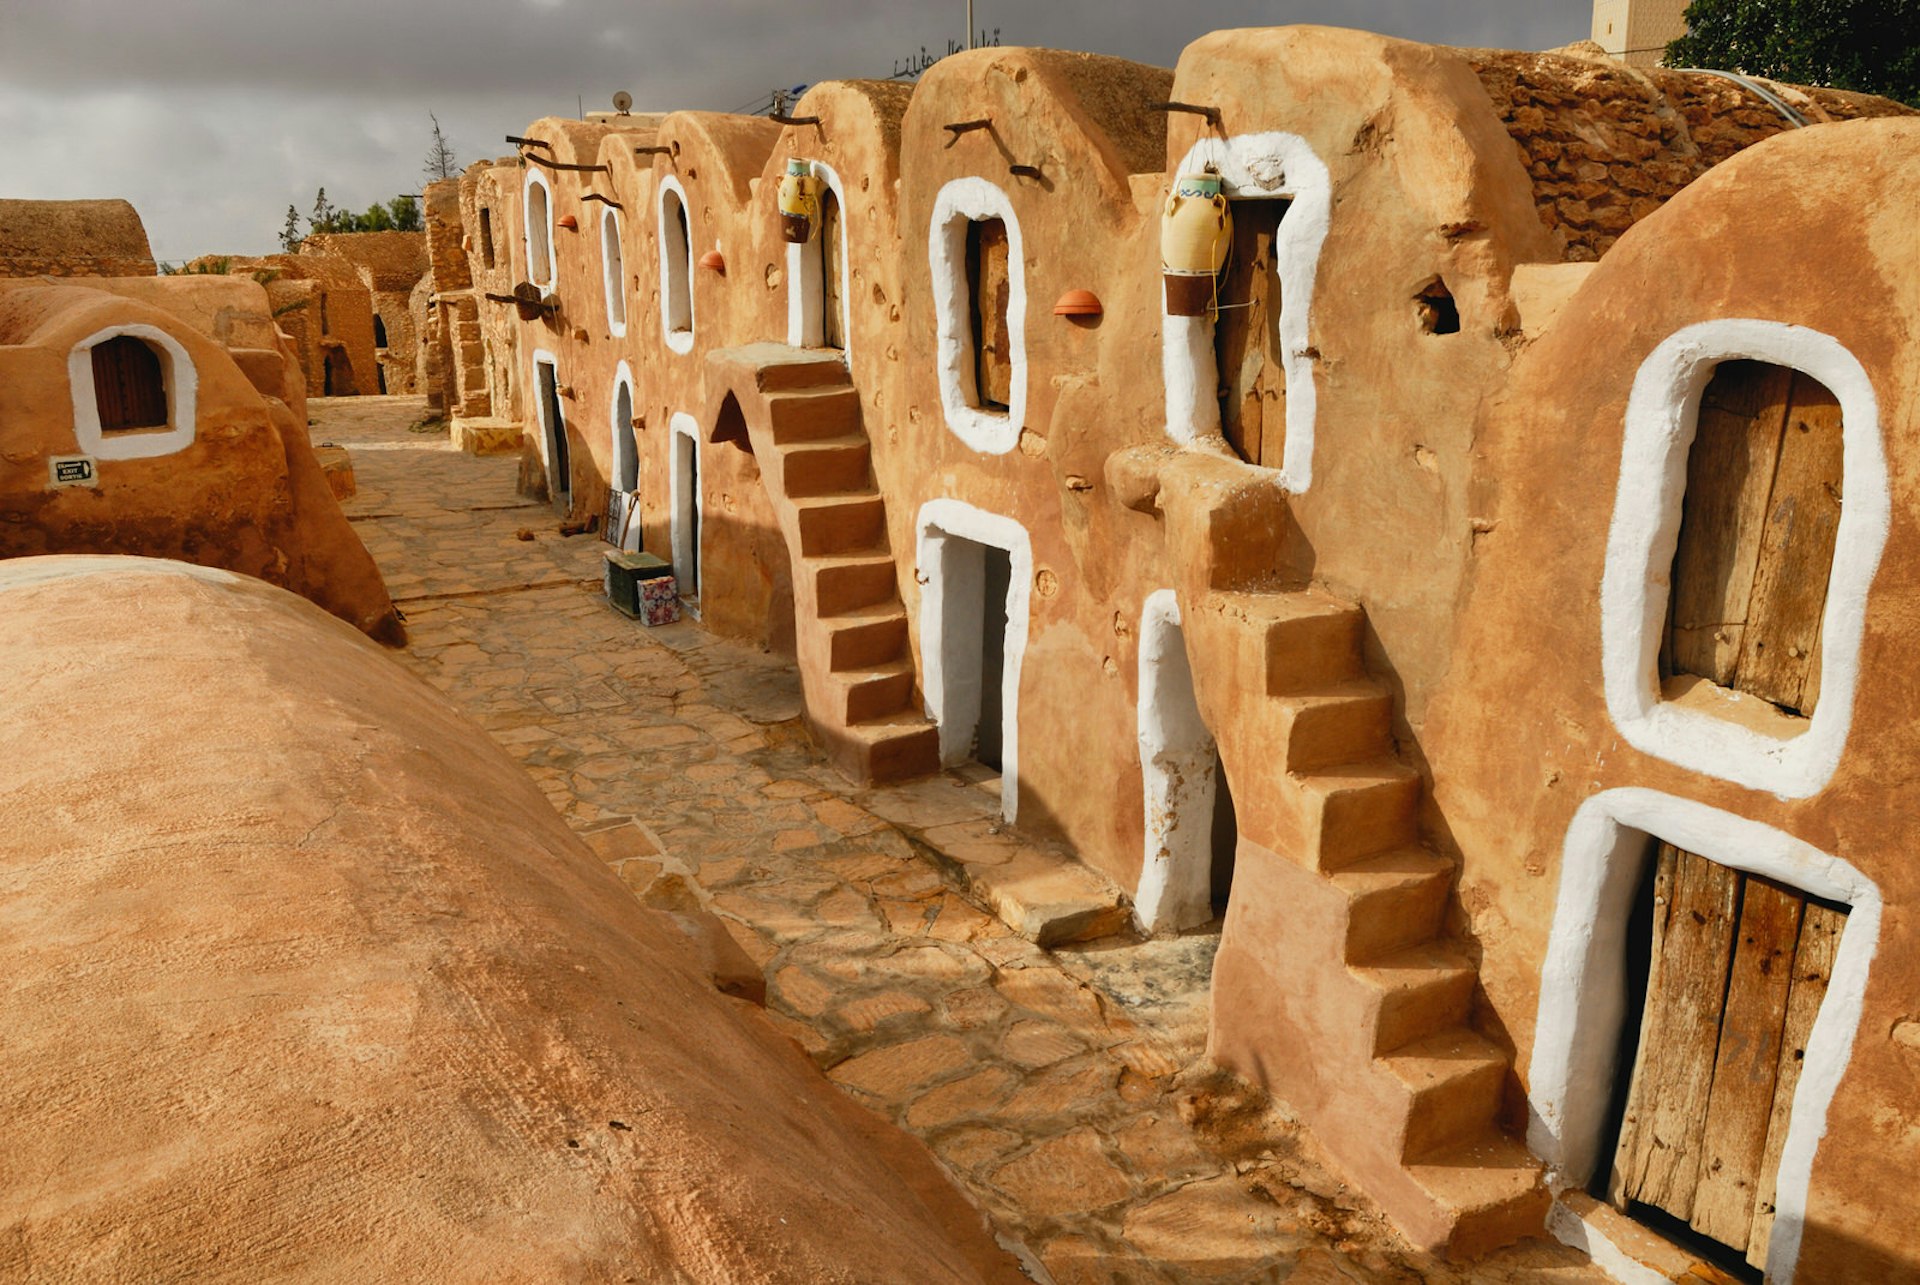 Tunisian granary. Ruins of an old building, Ksar Ouled Debbab, Tataouine, Tunisia. Star Wars film shooting location © Aleksandra H. Kossowska / Shutterstock